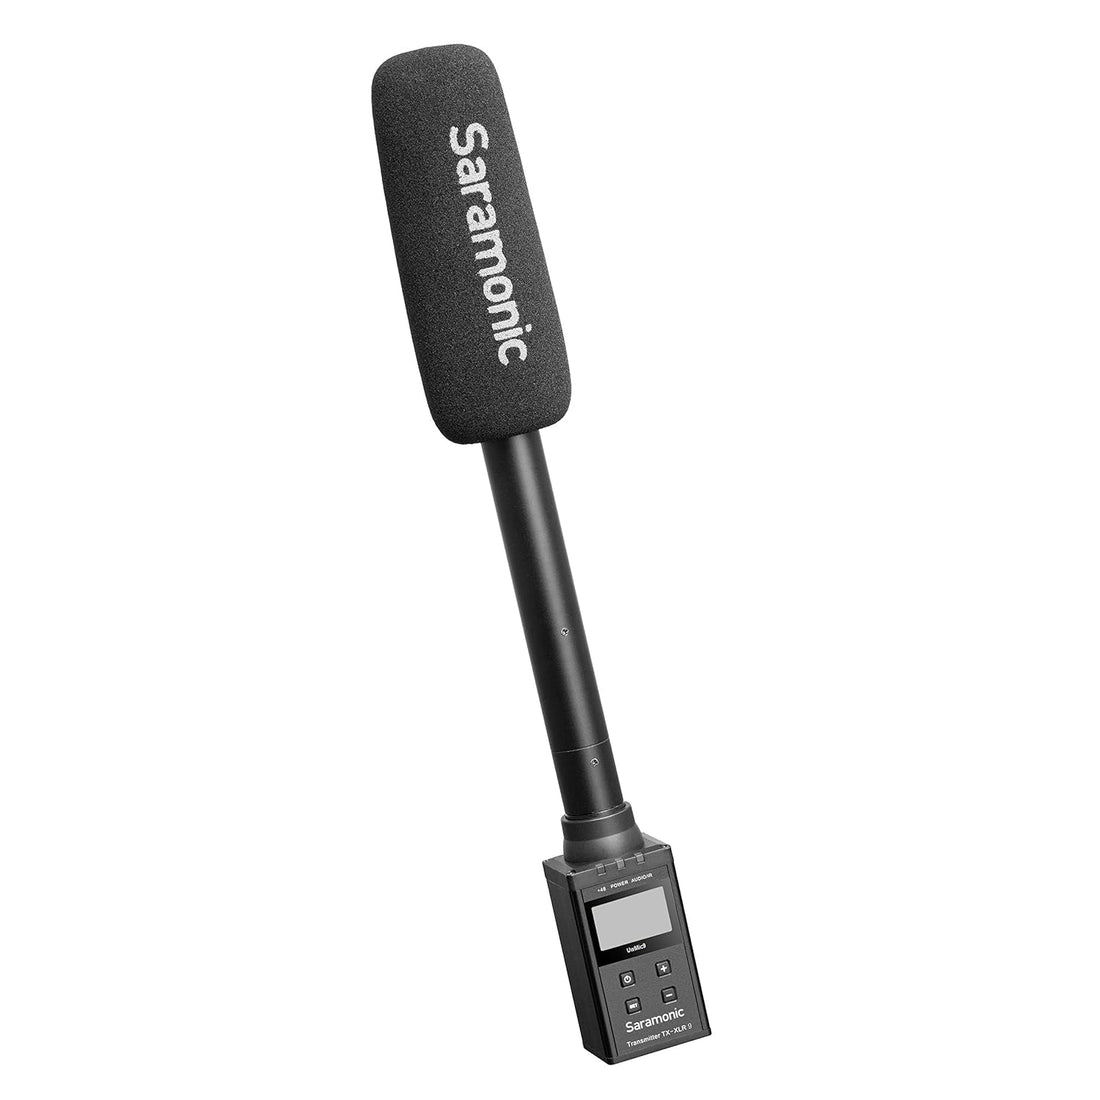 Saramonic UWMIC9 TX-XLR9 Plug-on XLR Transmitter for Digital UHF Wireless Microphone System (Black)